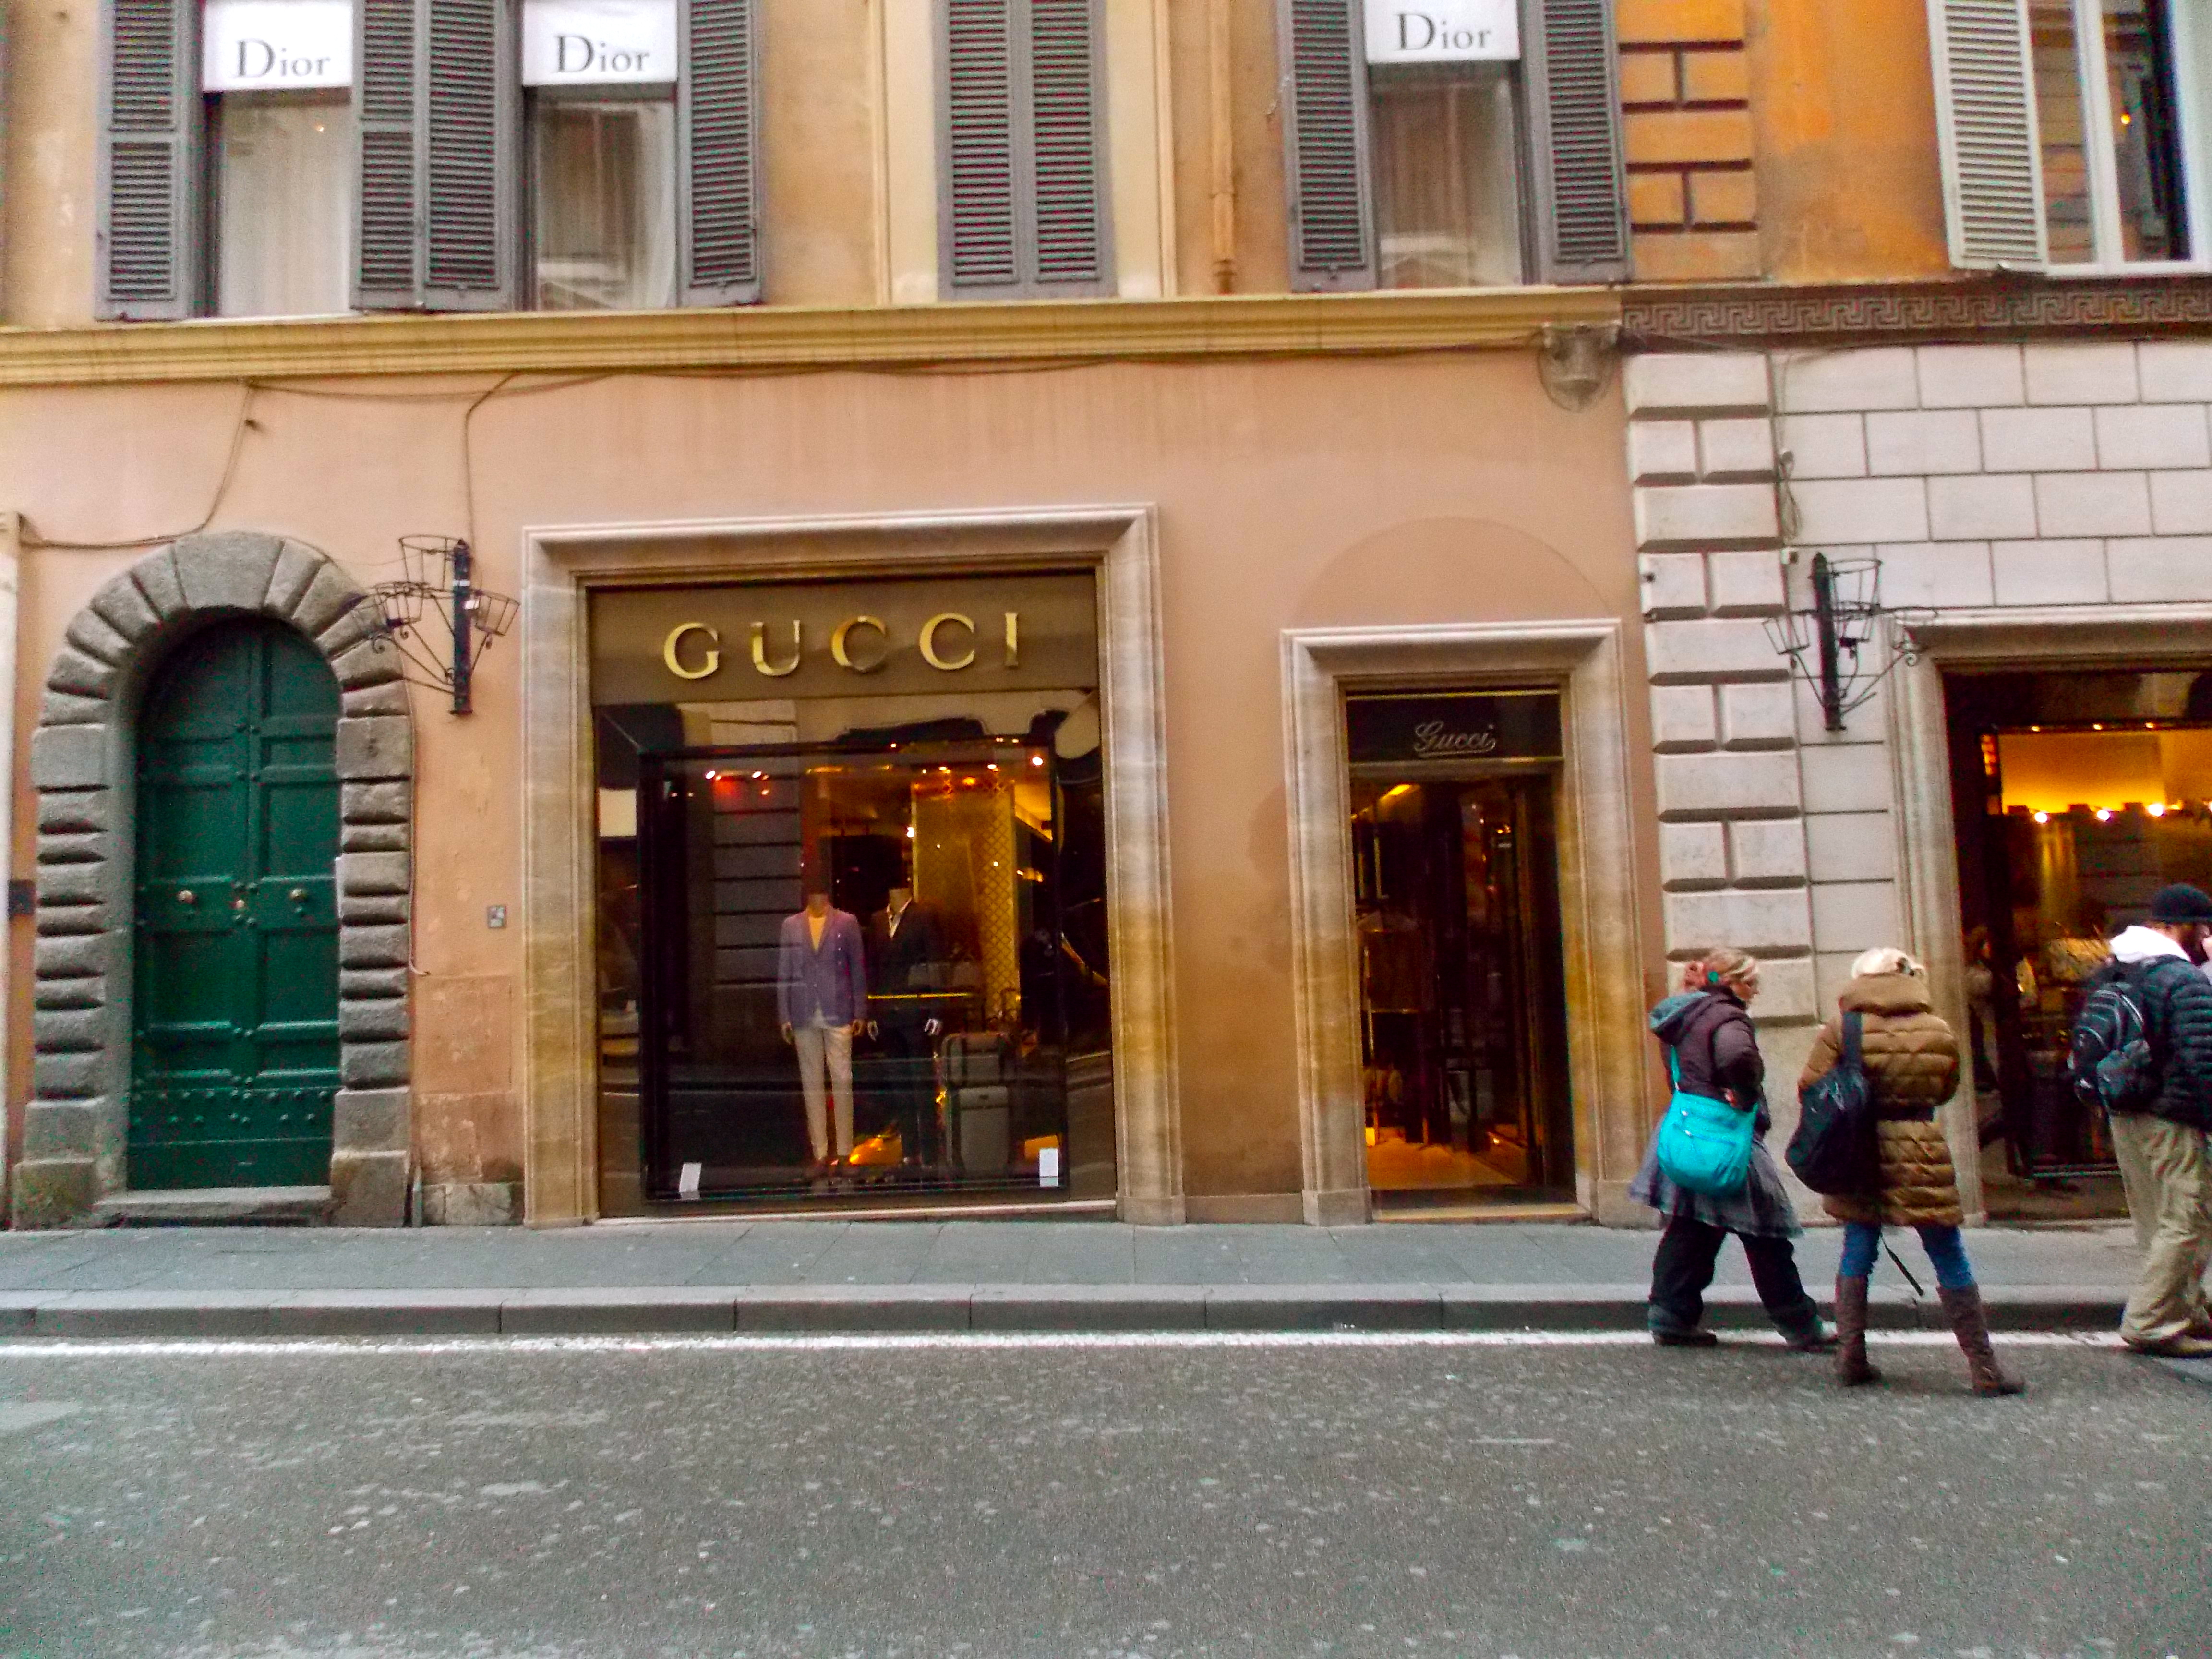 Gucci Loui Fendi Prada, Buy Now, Discount, 54% OFF, 